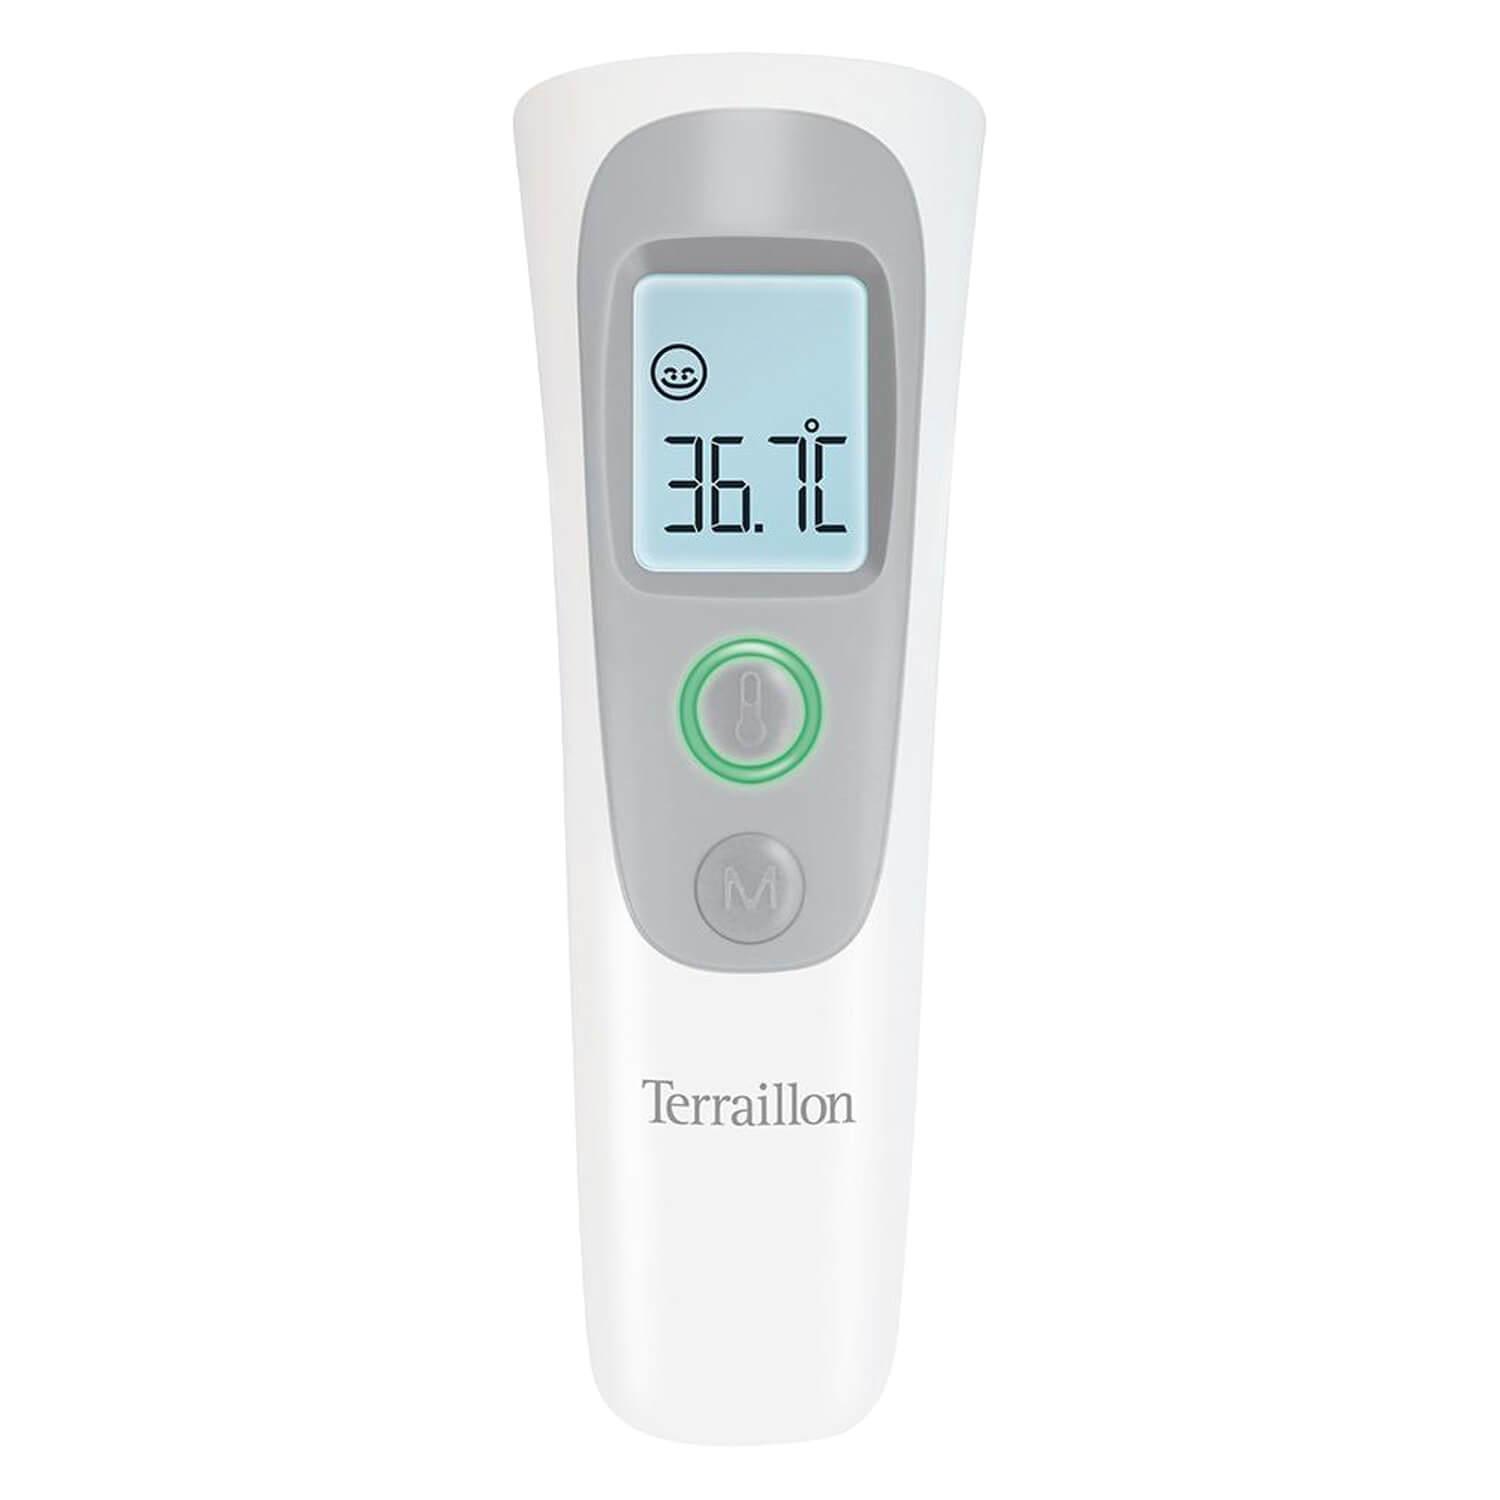 Terraillon - Kontaktloses Infrarot Thermometer